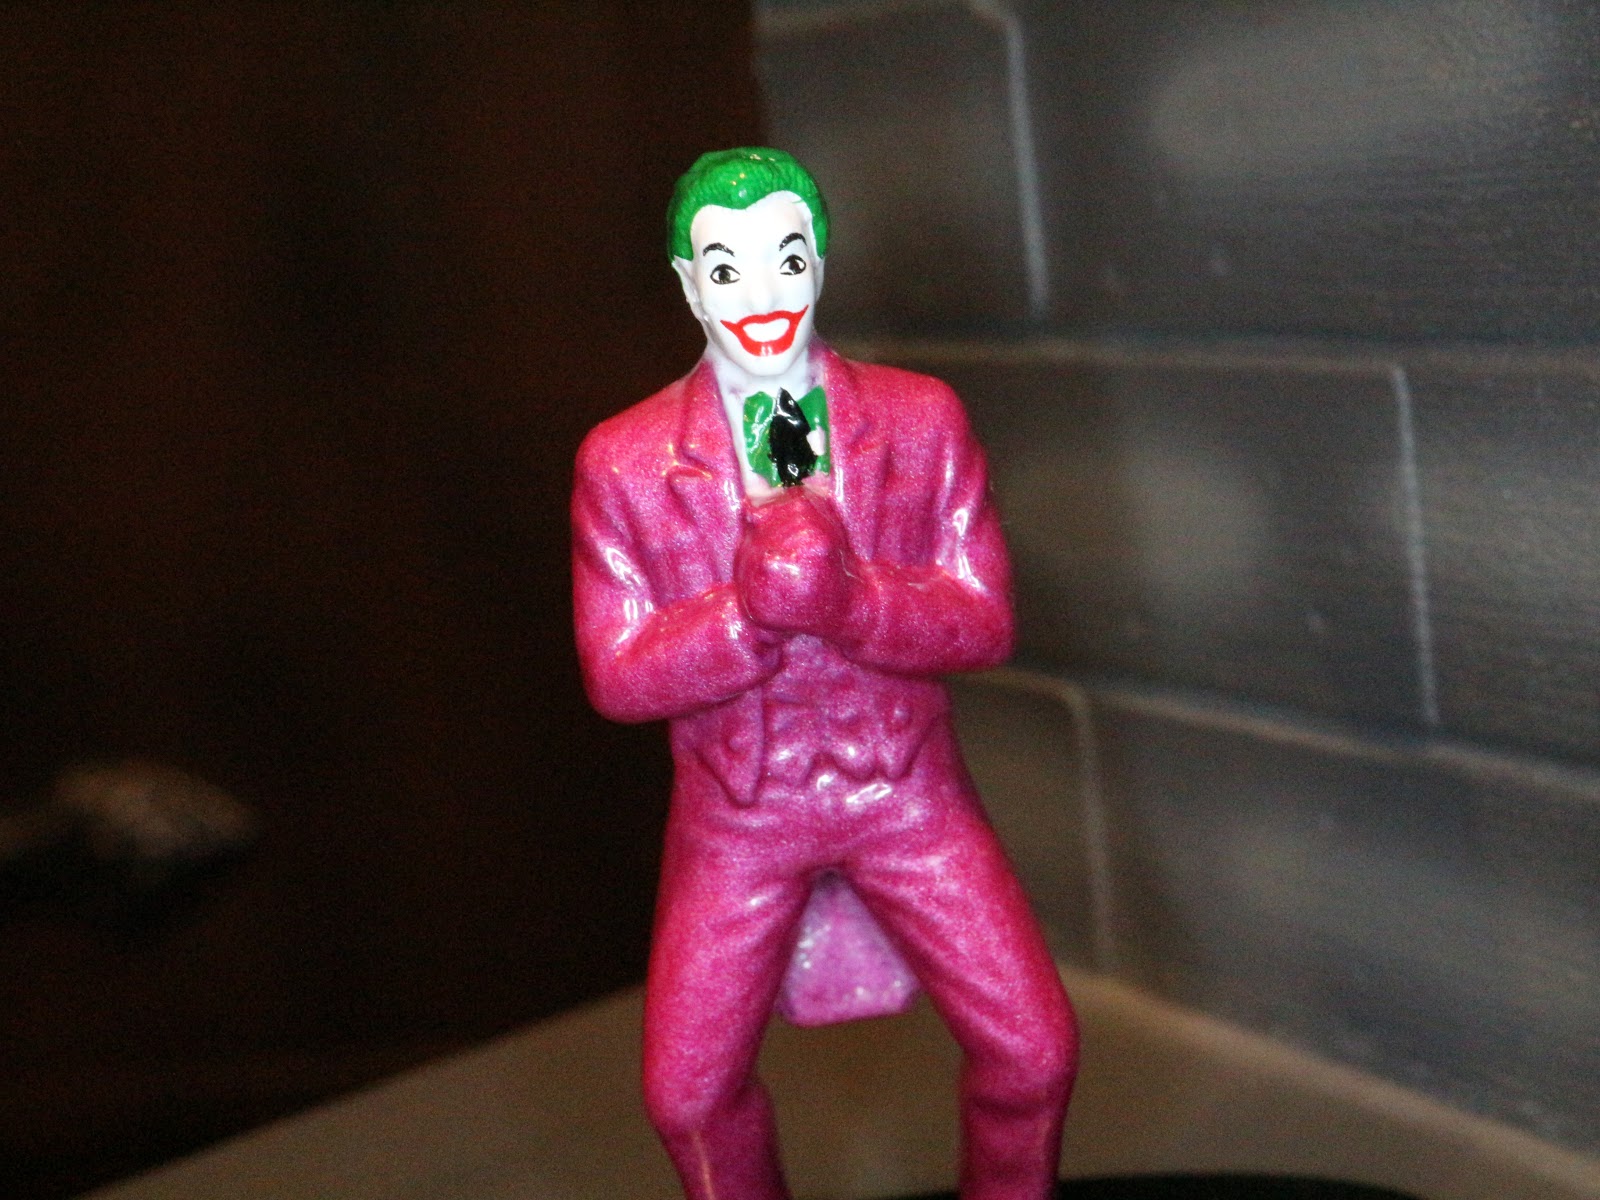 The Joker DC 1.5 Inch Diecast Nano Metal Figure by Jada DC54